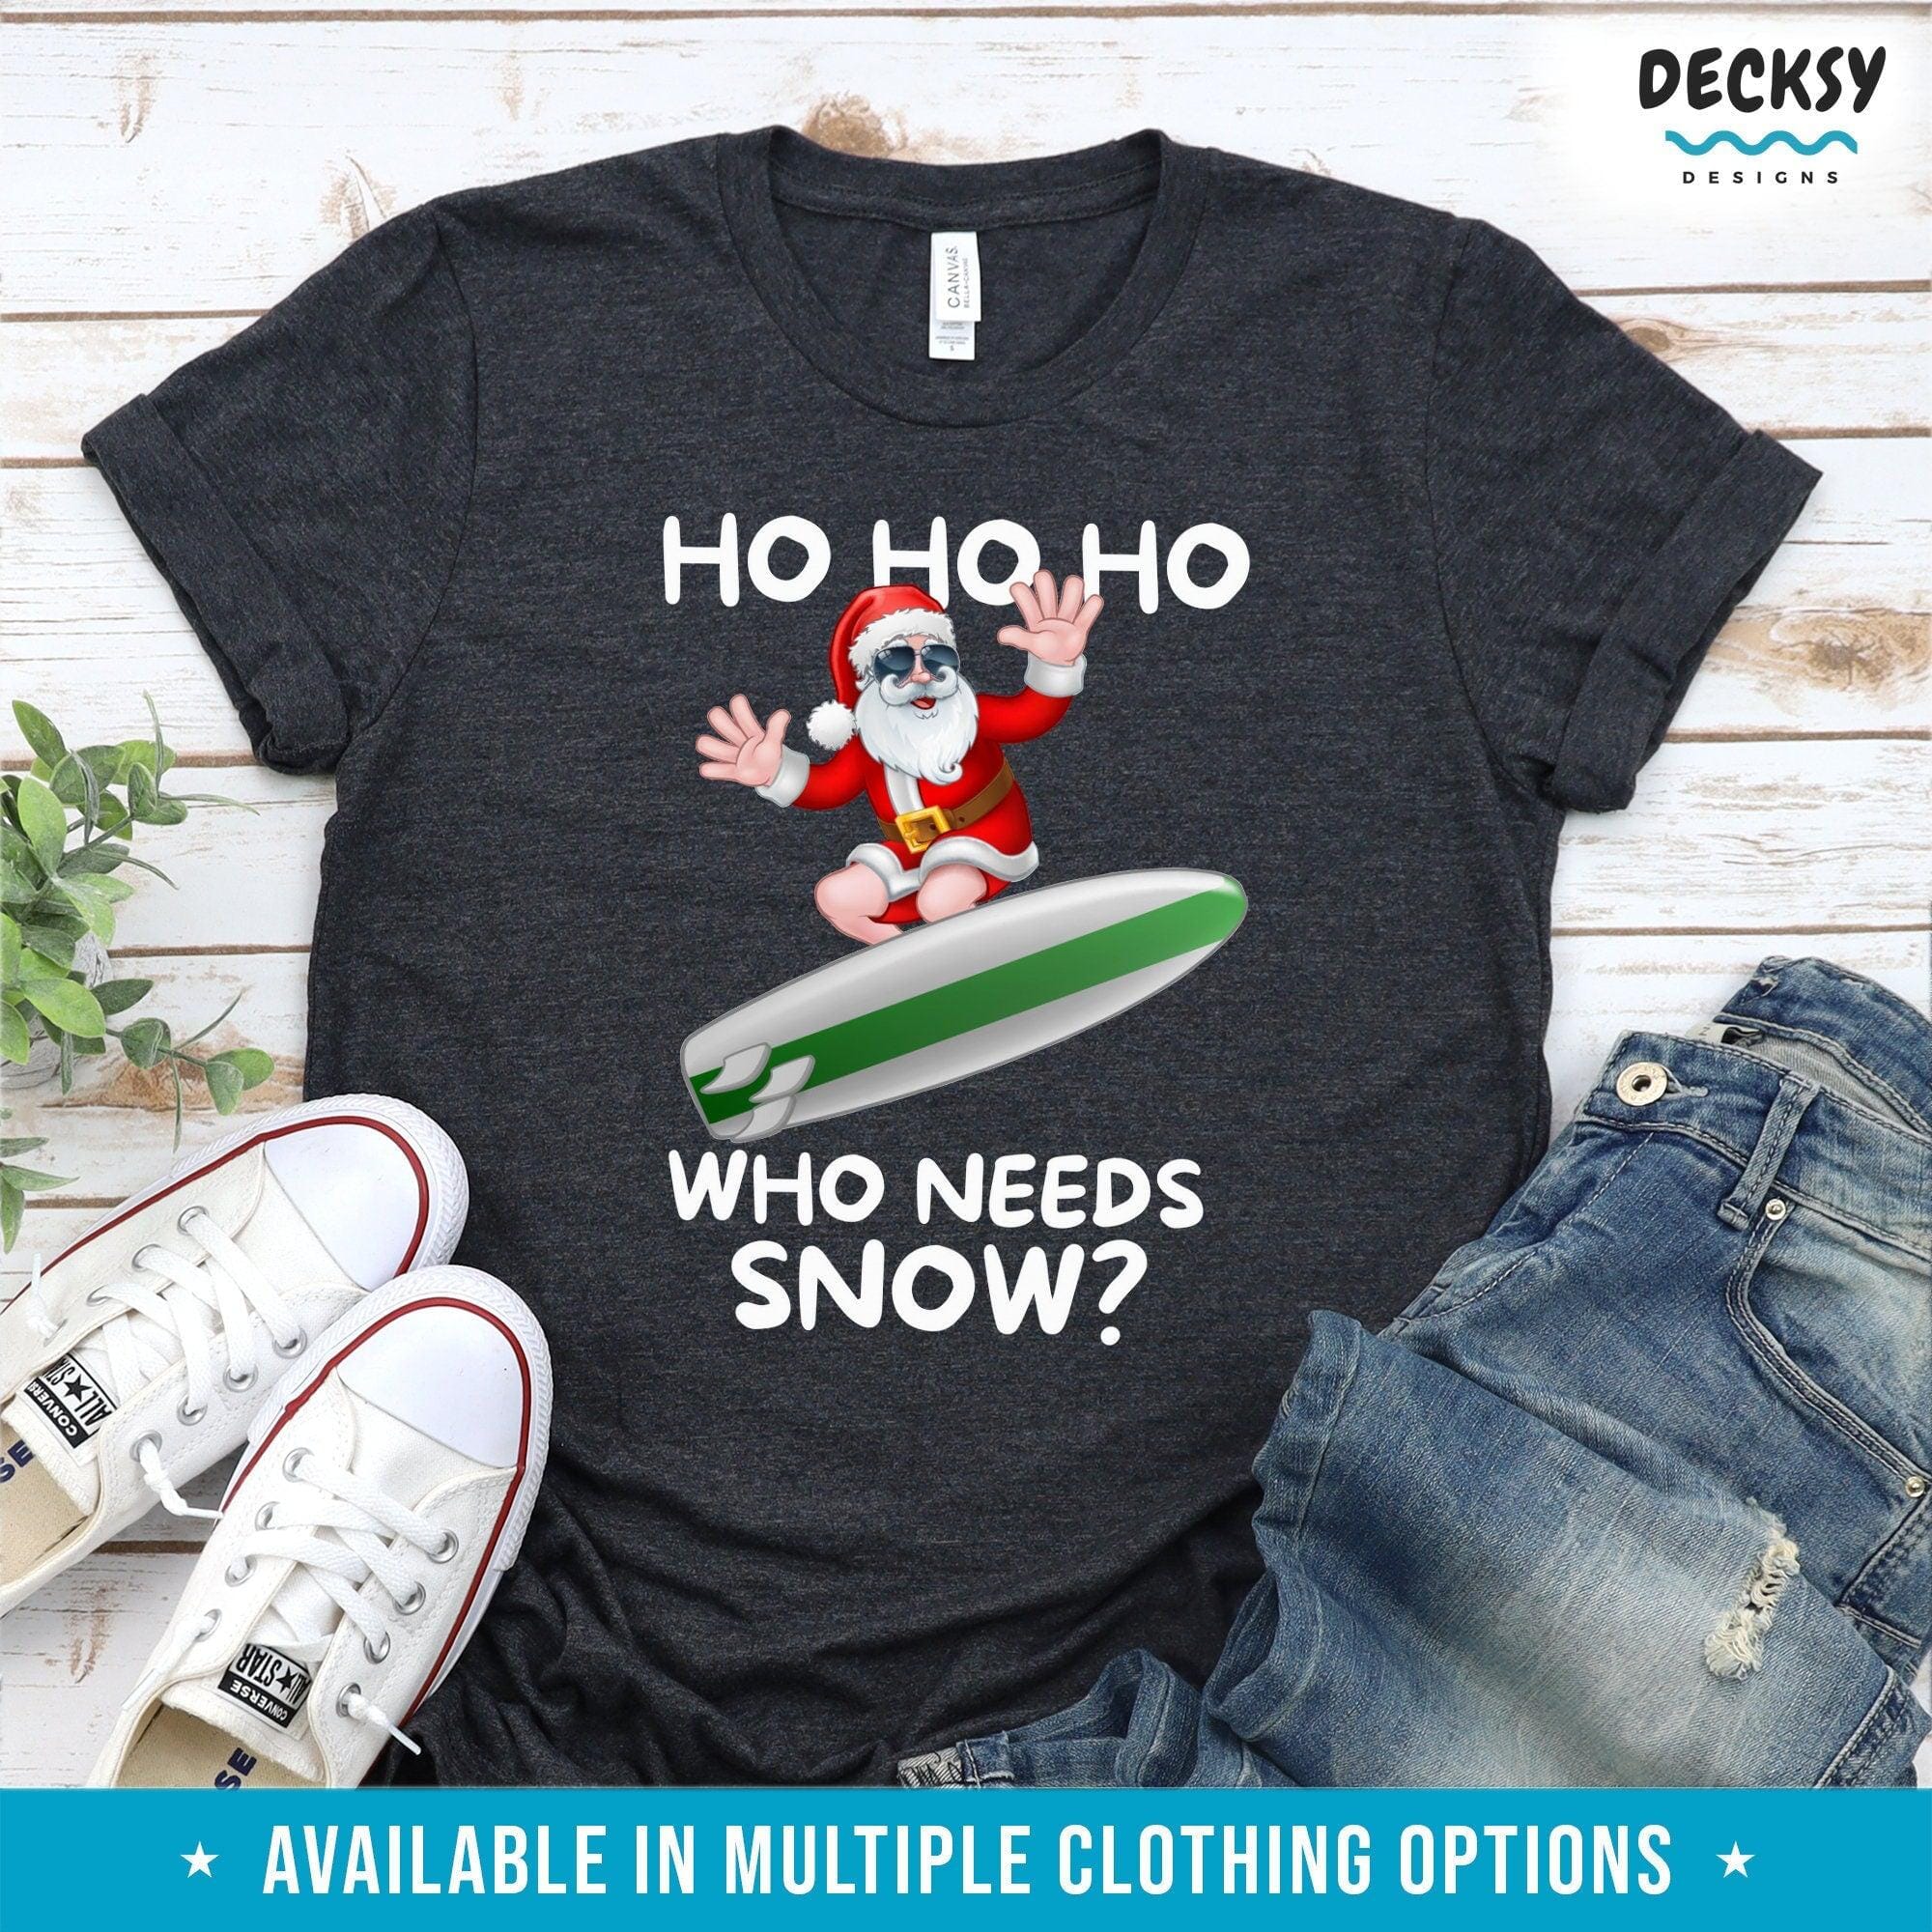 Surfing Santa Shirt, Australian Christmas Gift-Clothing:Gender-Neutral Adult Clothing:Tops & Tees:T-shirts:Graphic Tees-DecksyDesigns